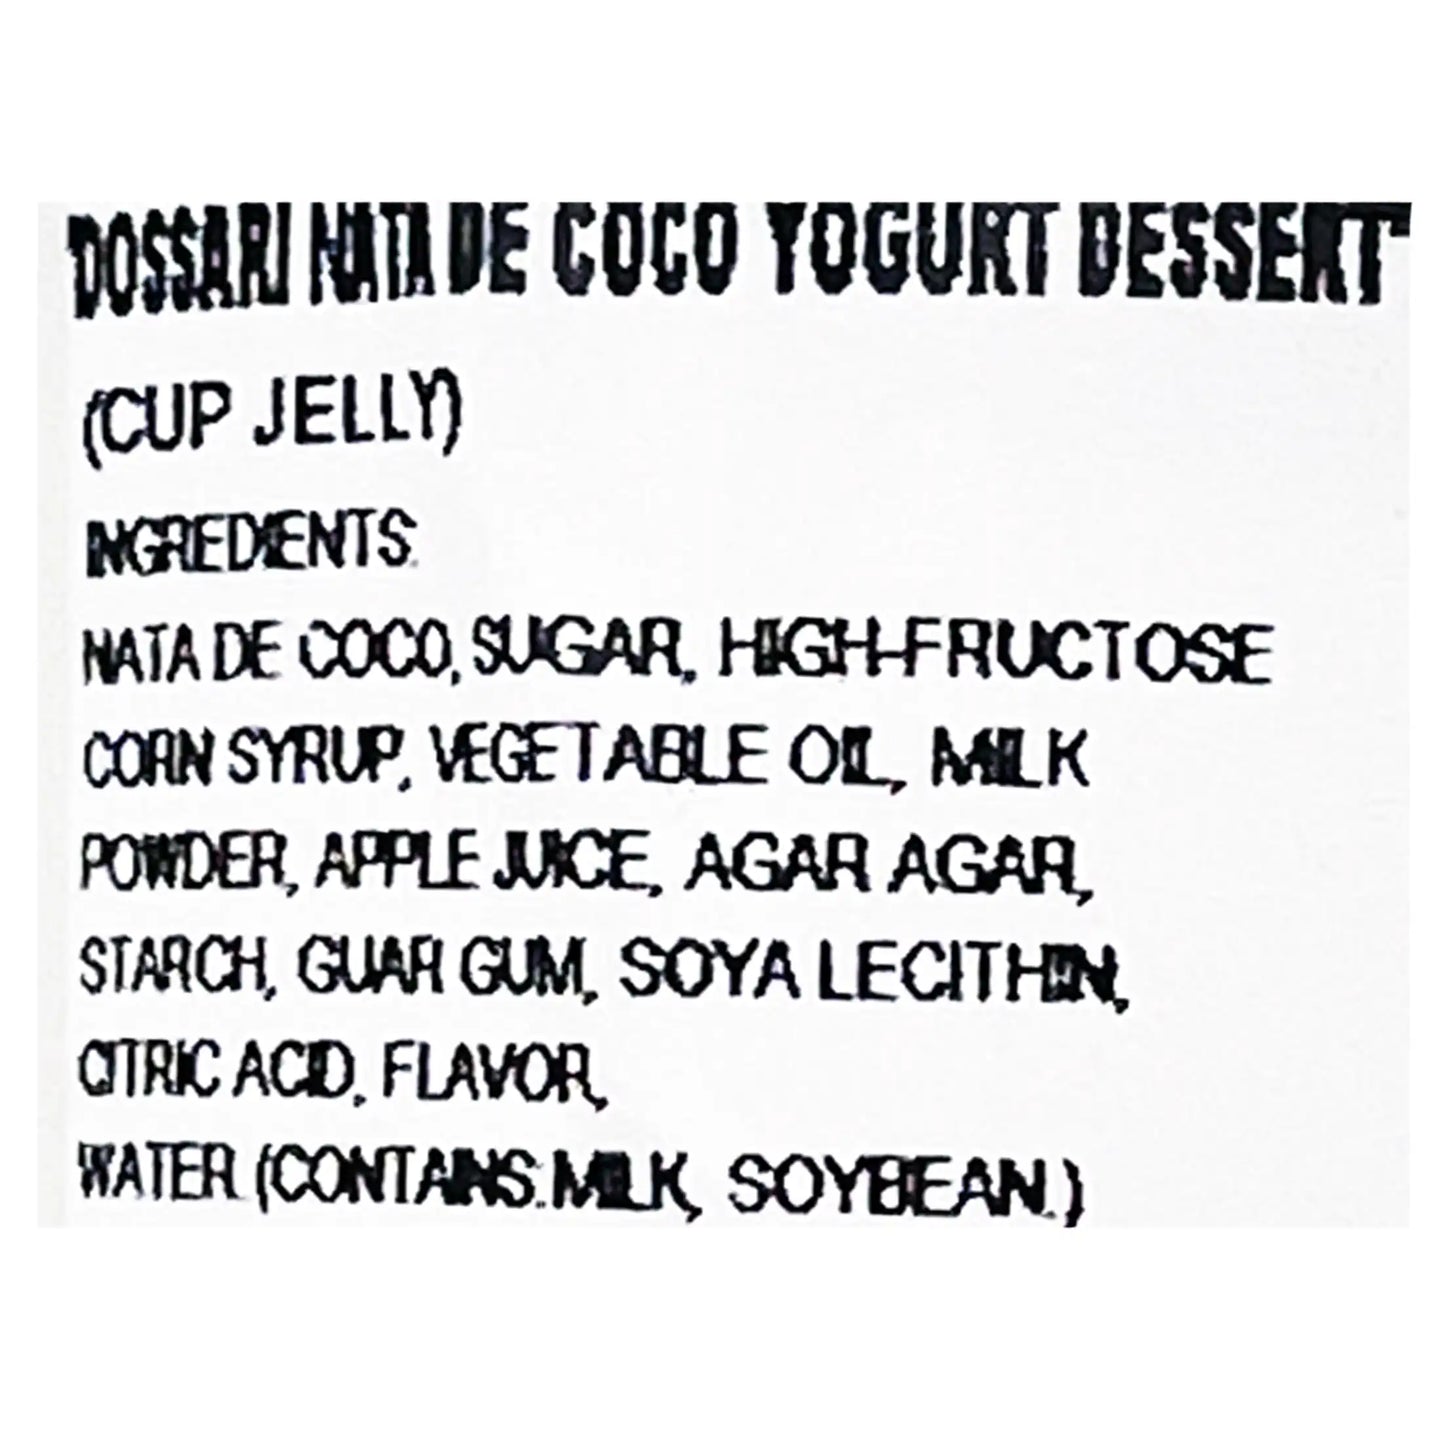 Tarami Dossari Jelly Cup Nata de Coco Yogurt 8.11 oz